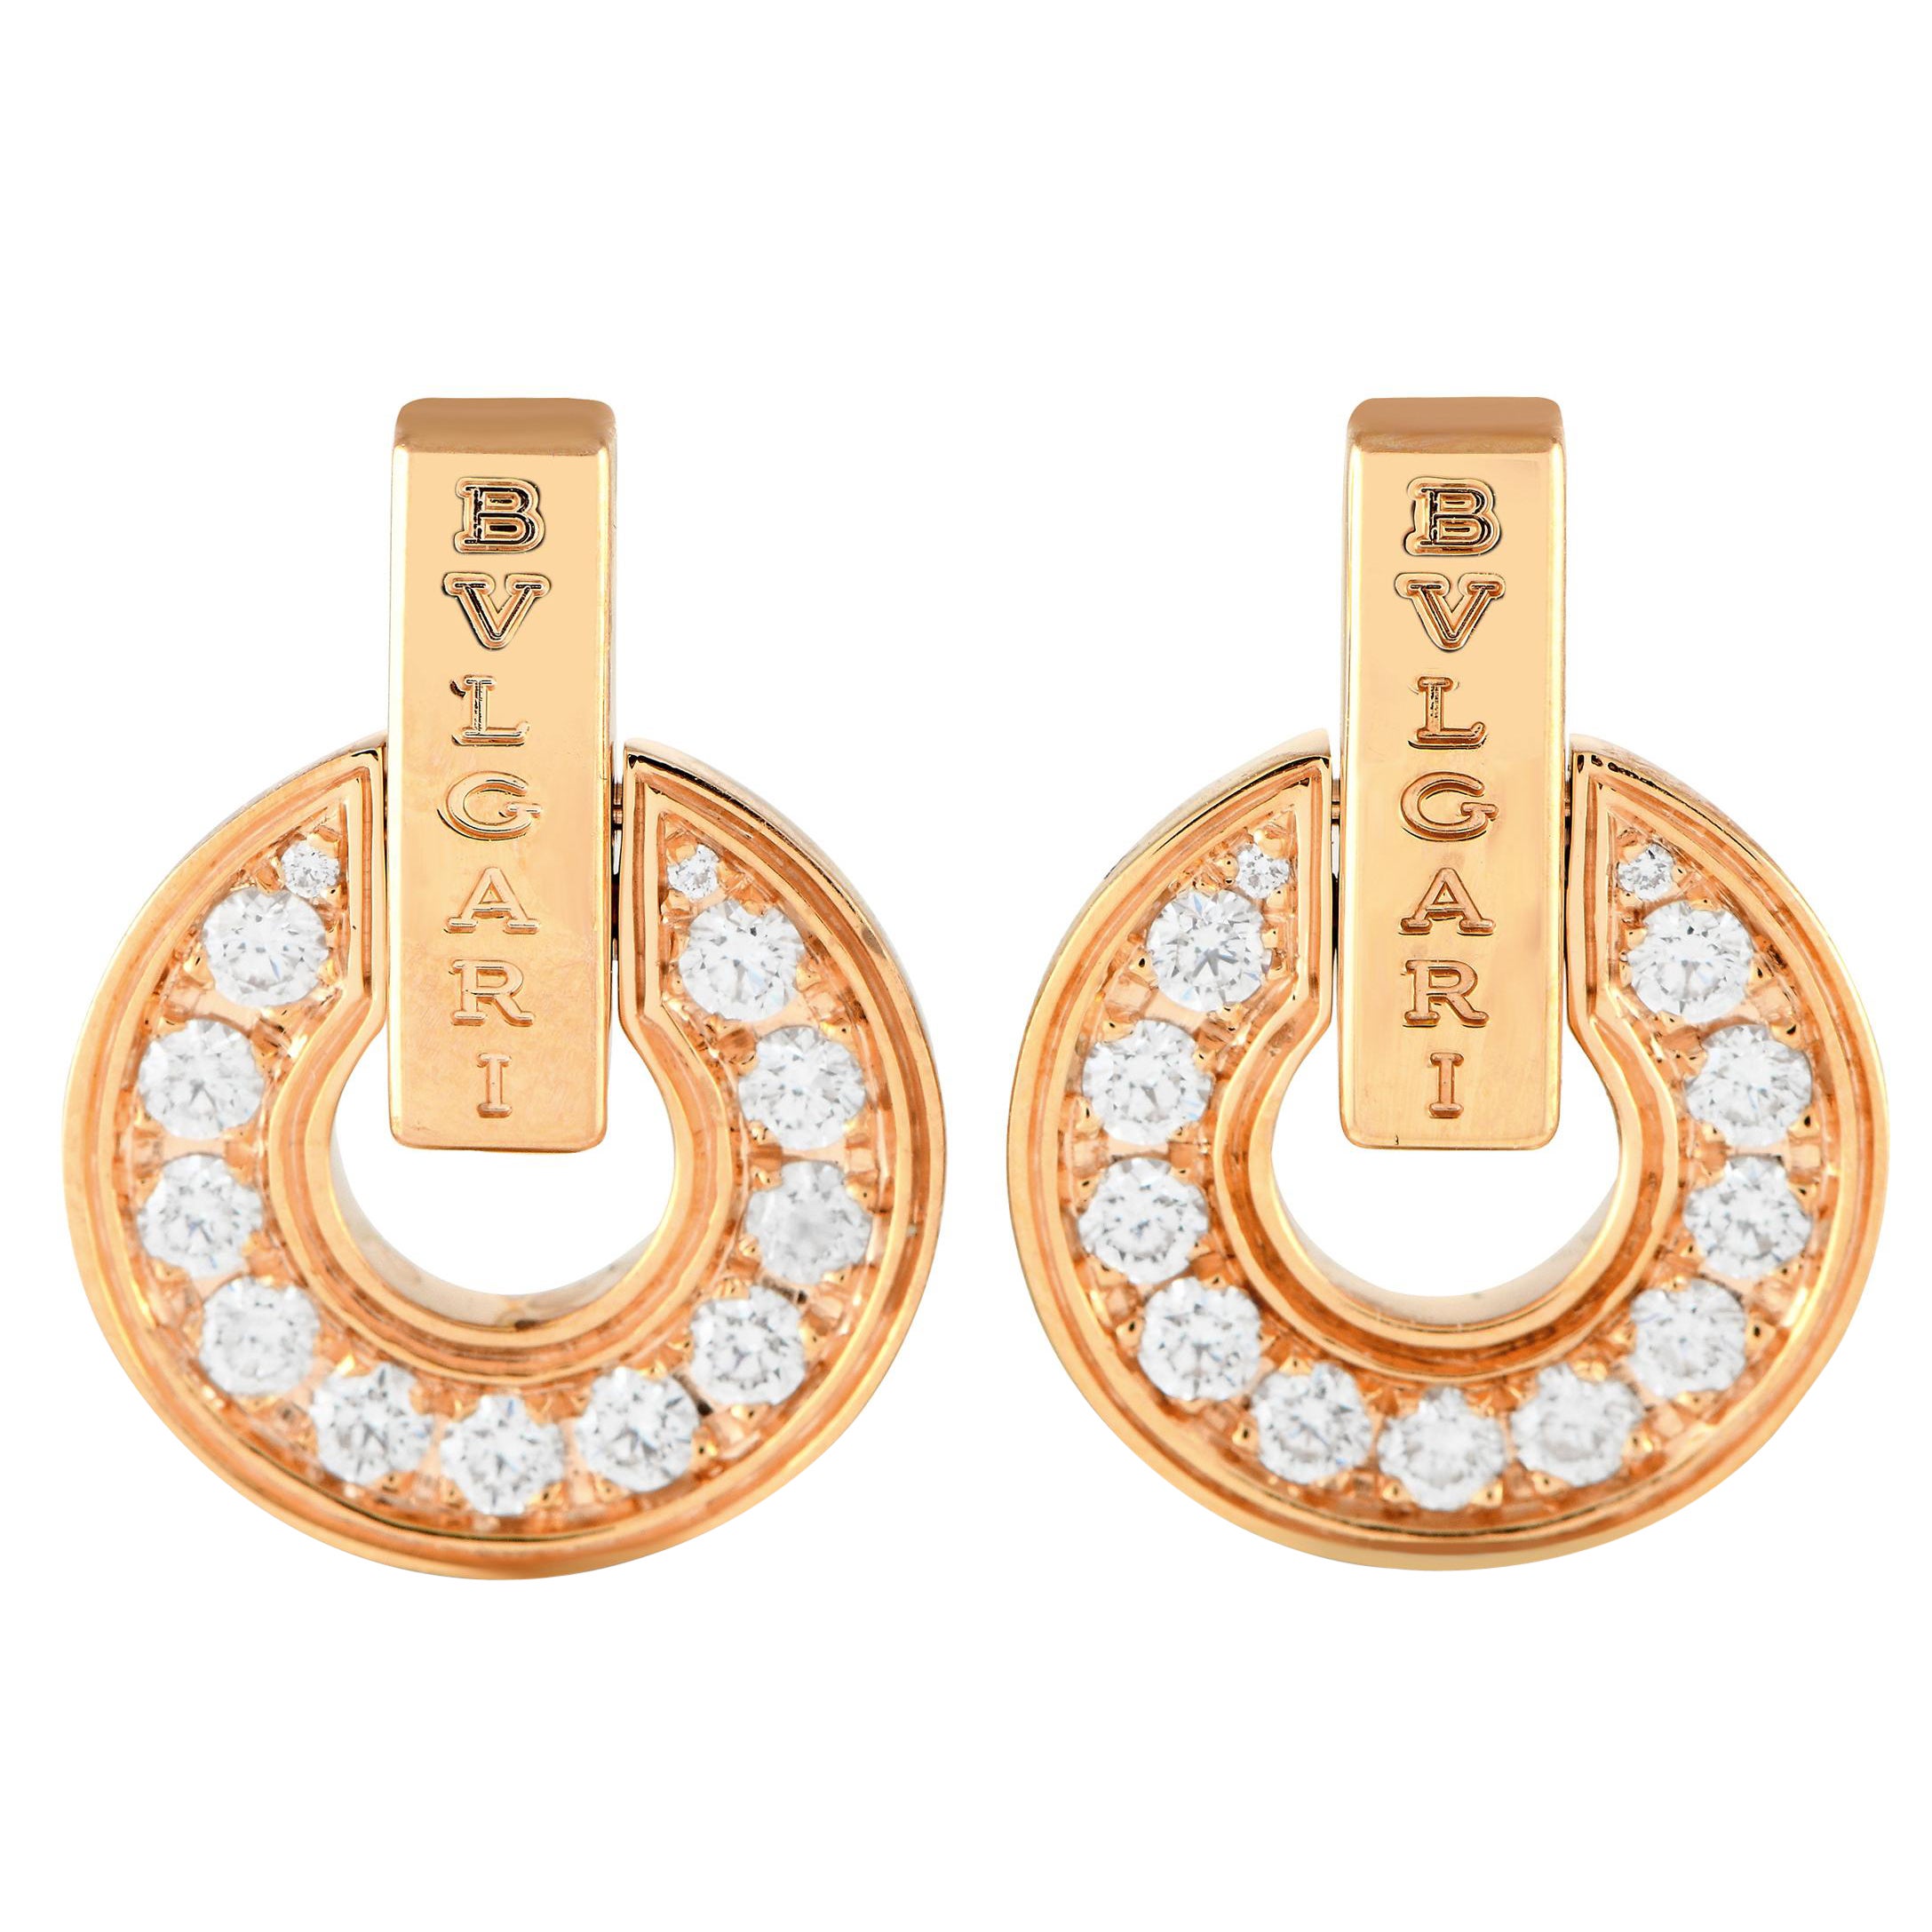 Bvlgari Bvlgari 18K Rose Gold 0.35ct Diamond Earrings BV13-021424